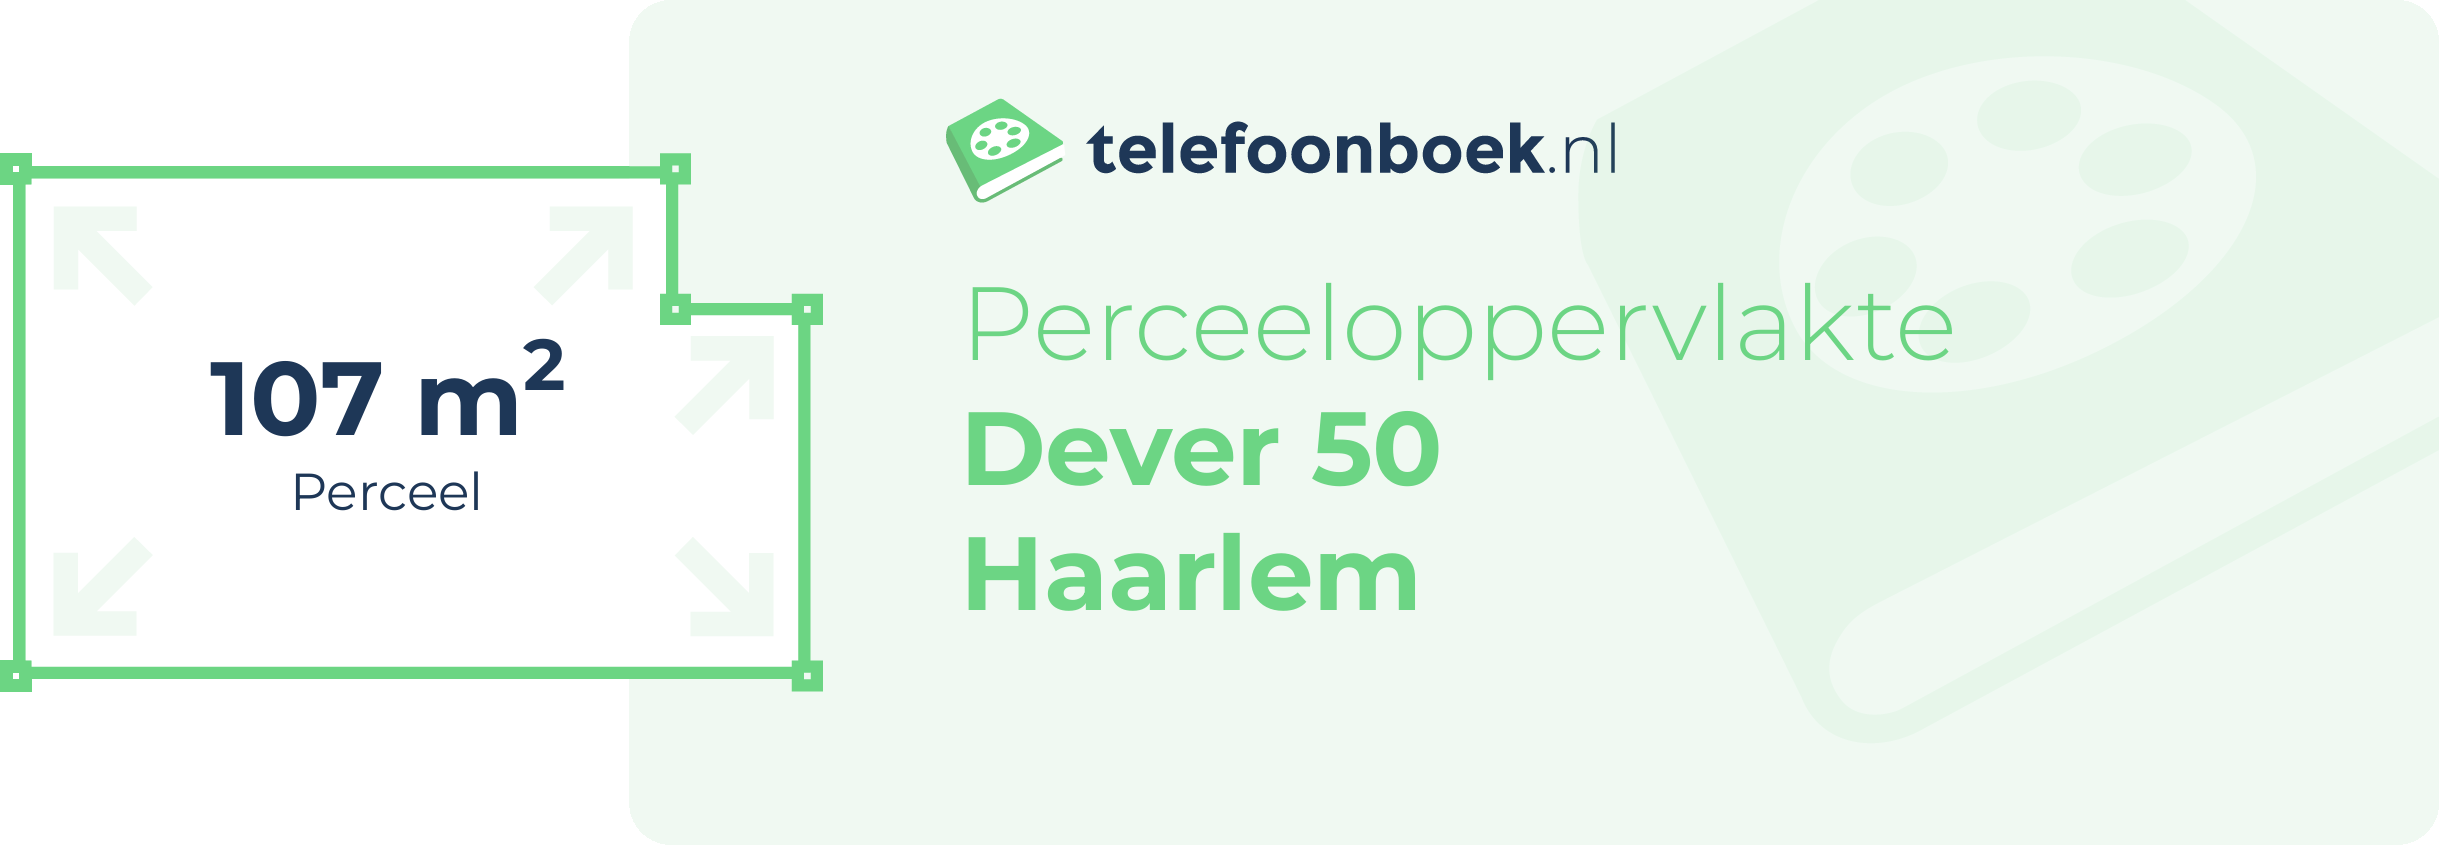 Perceeloppervlakte Dever 50 Haarlem